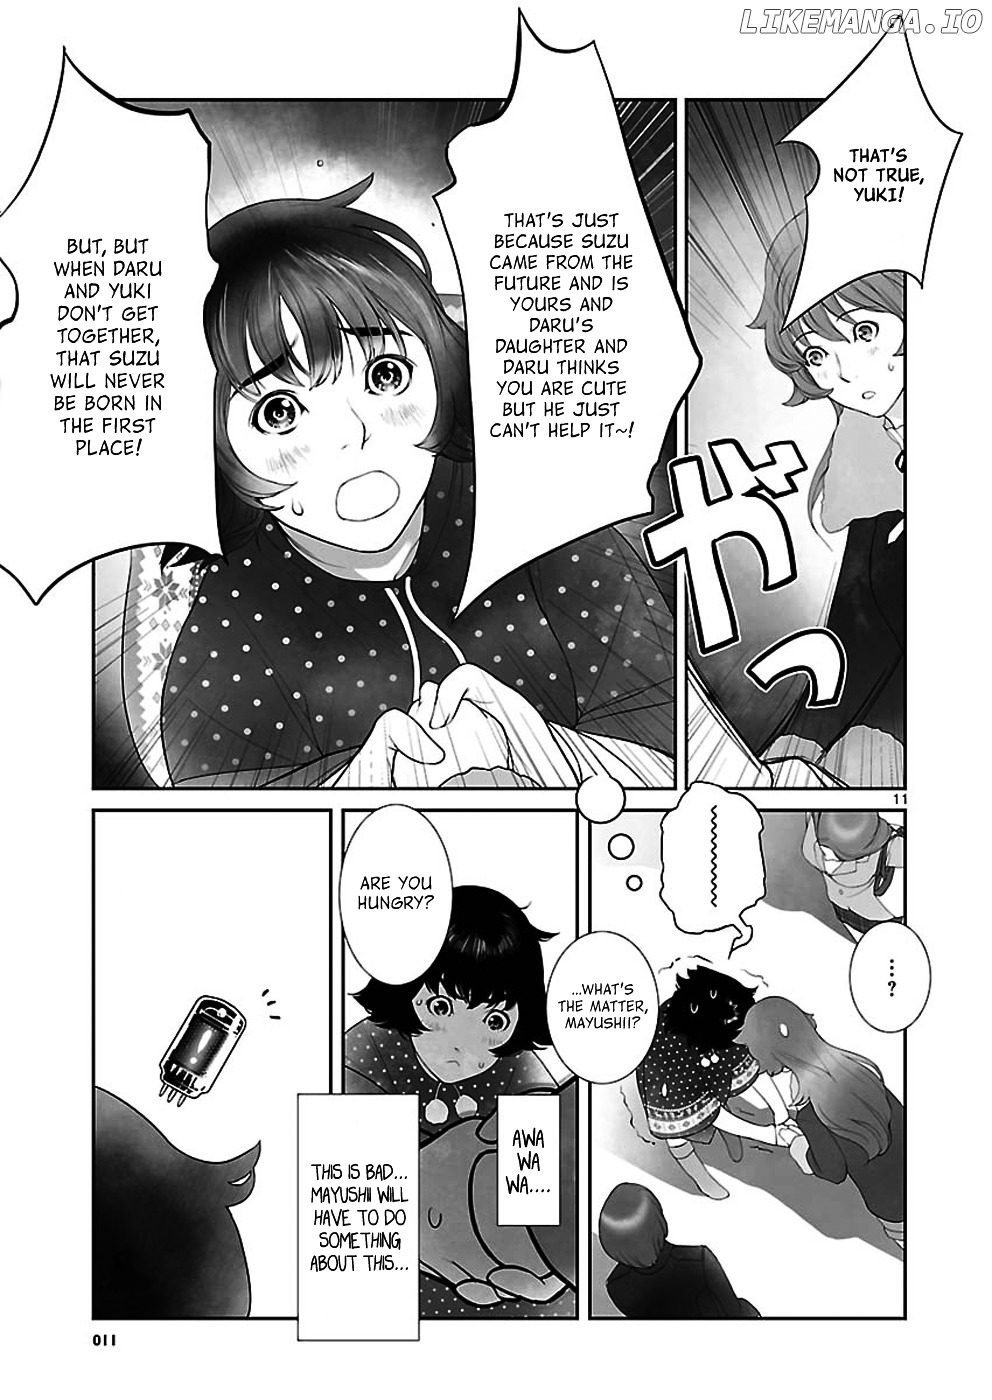 Steins;Gate - Eigou Kaiki no Pandora chapter 3 - page 11